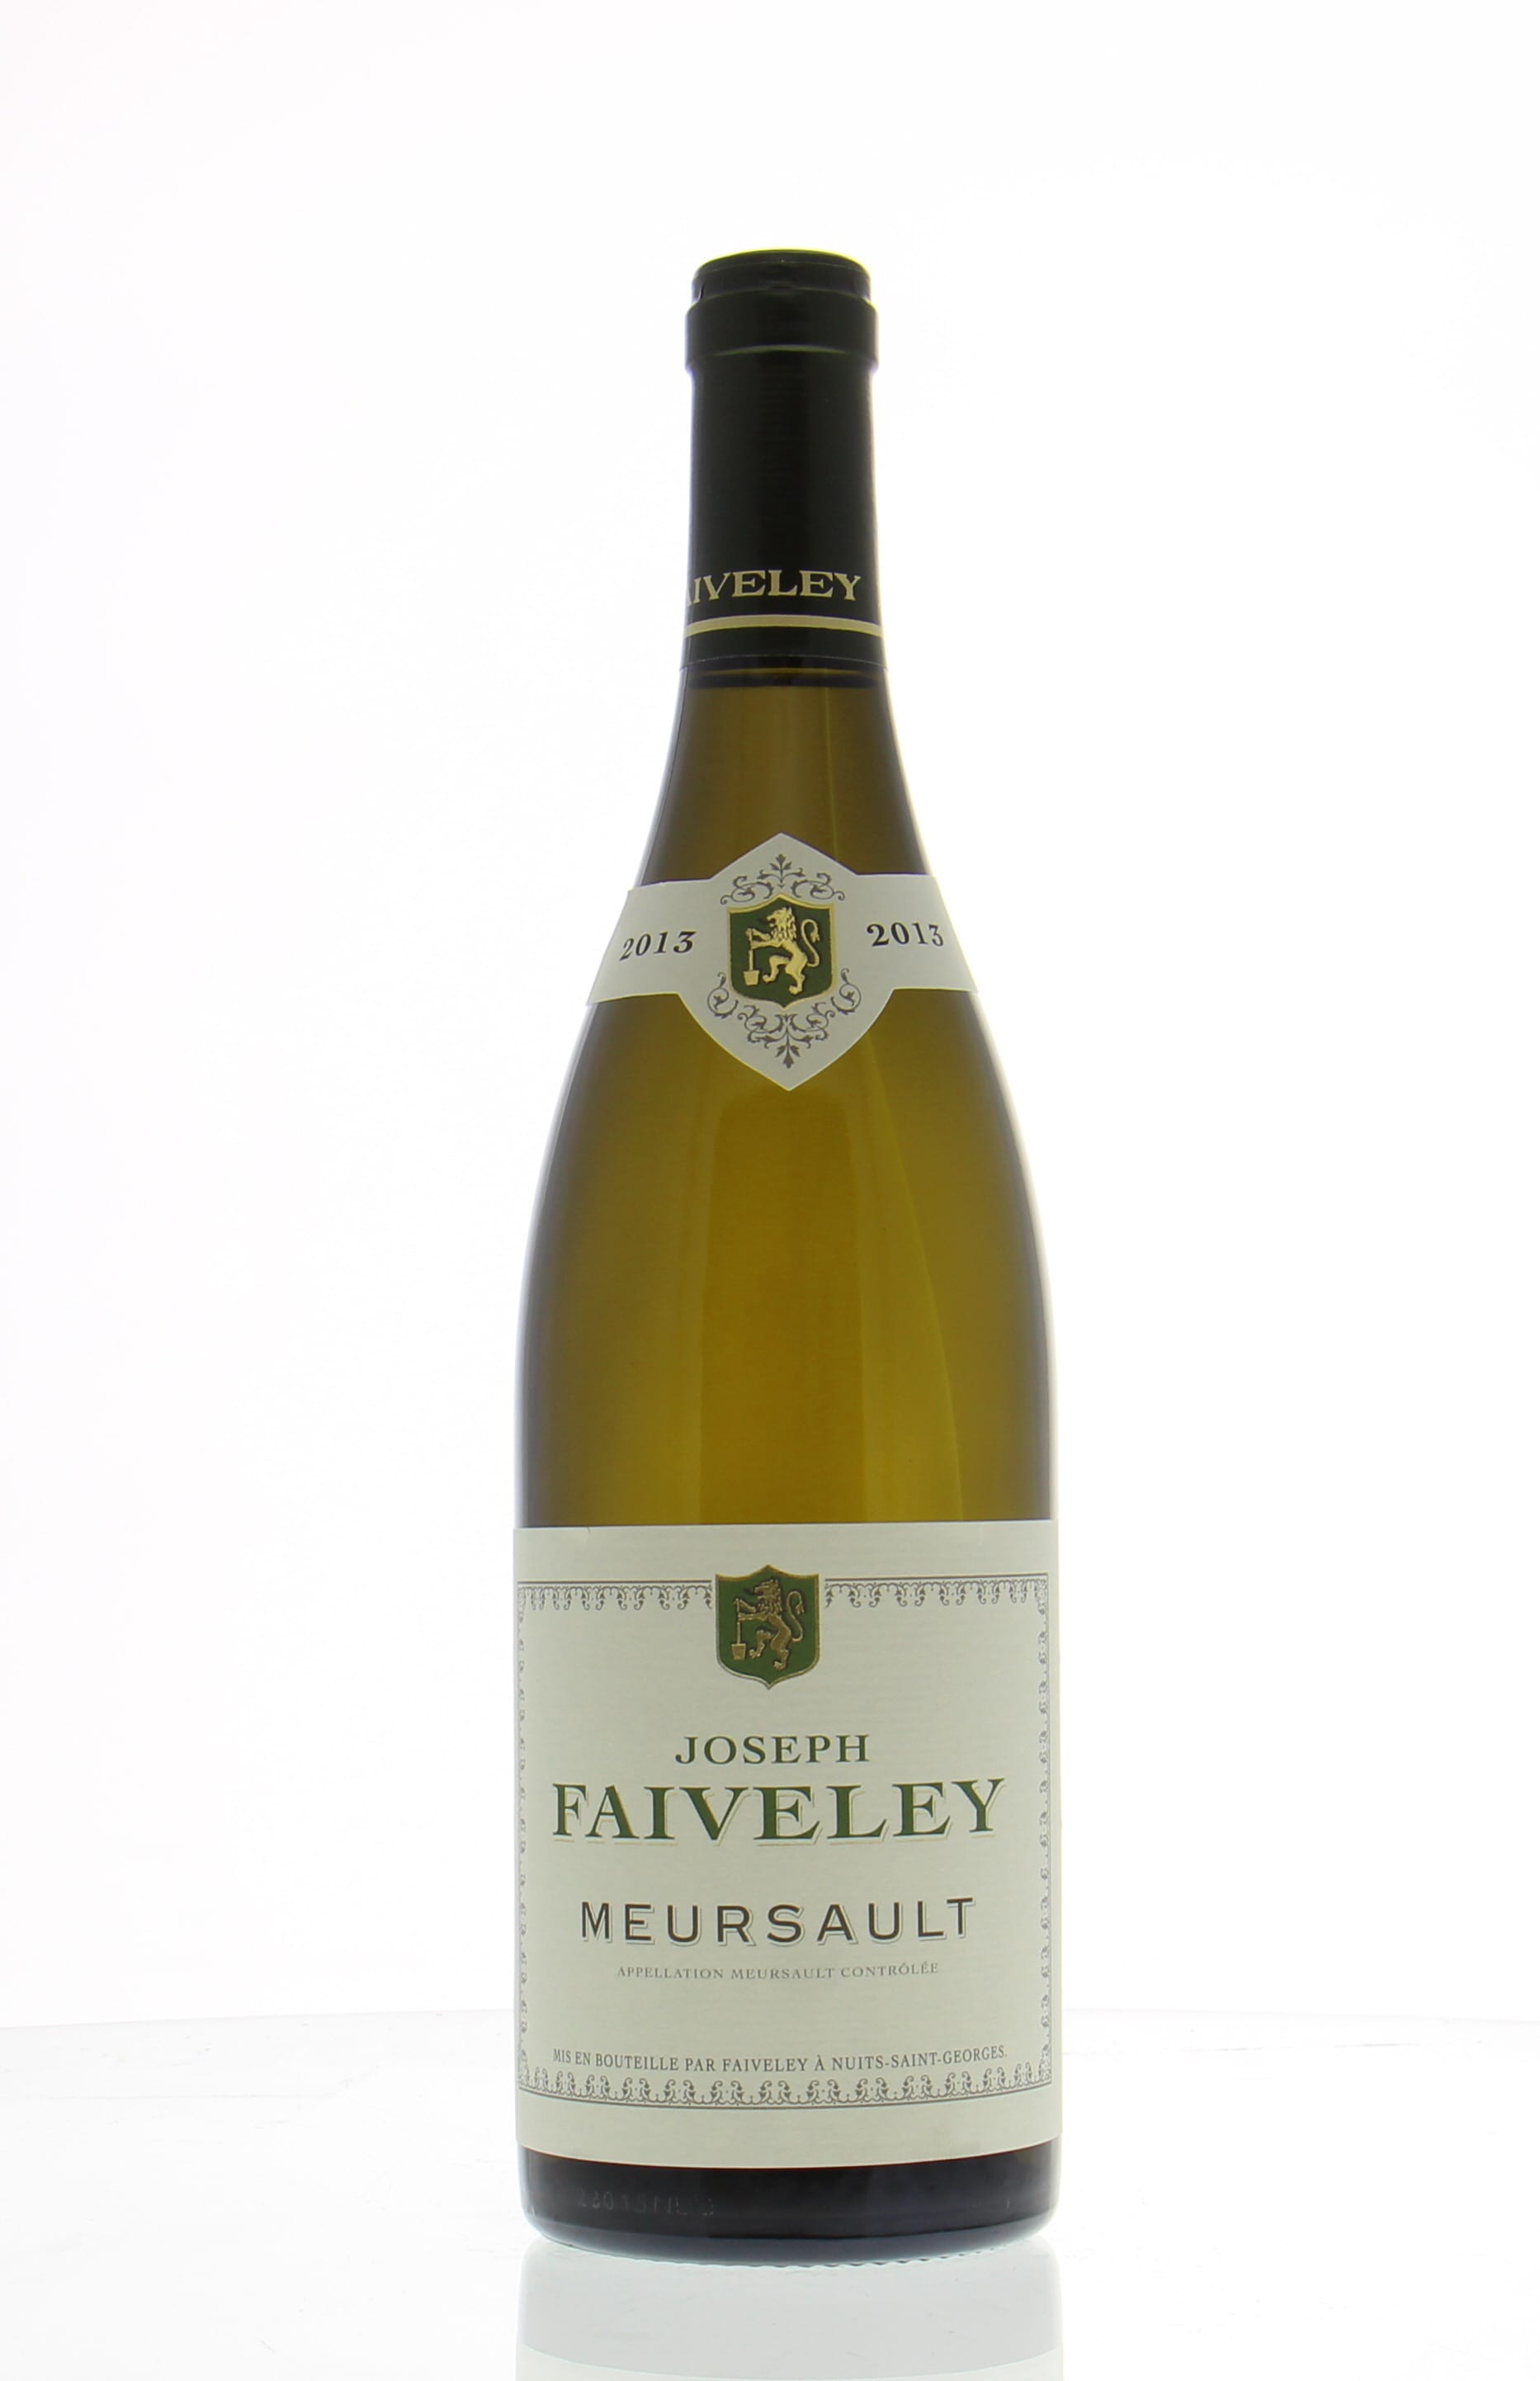 Faiveley - Meursault 2013 Perfect